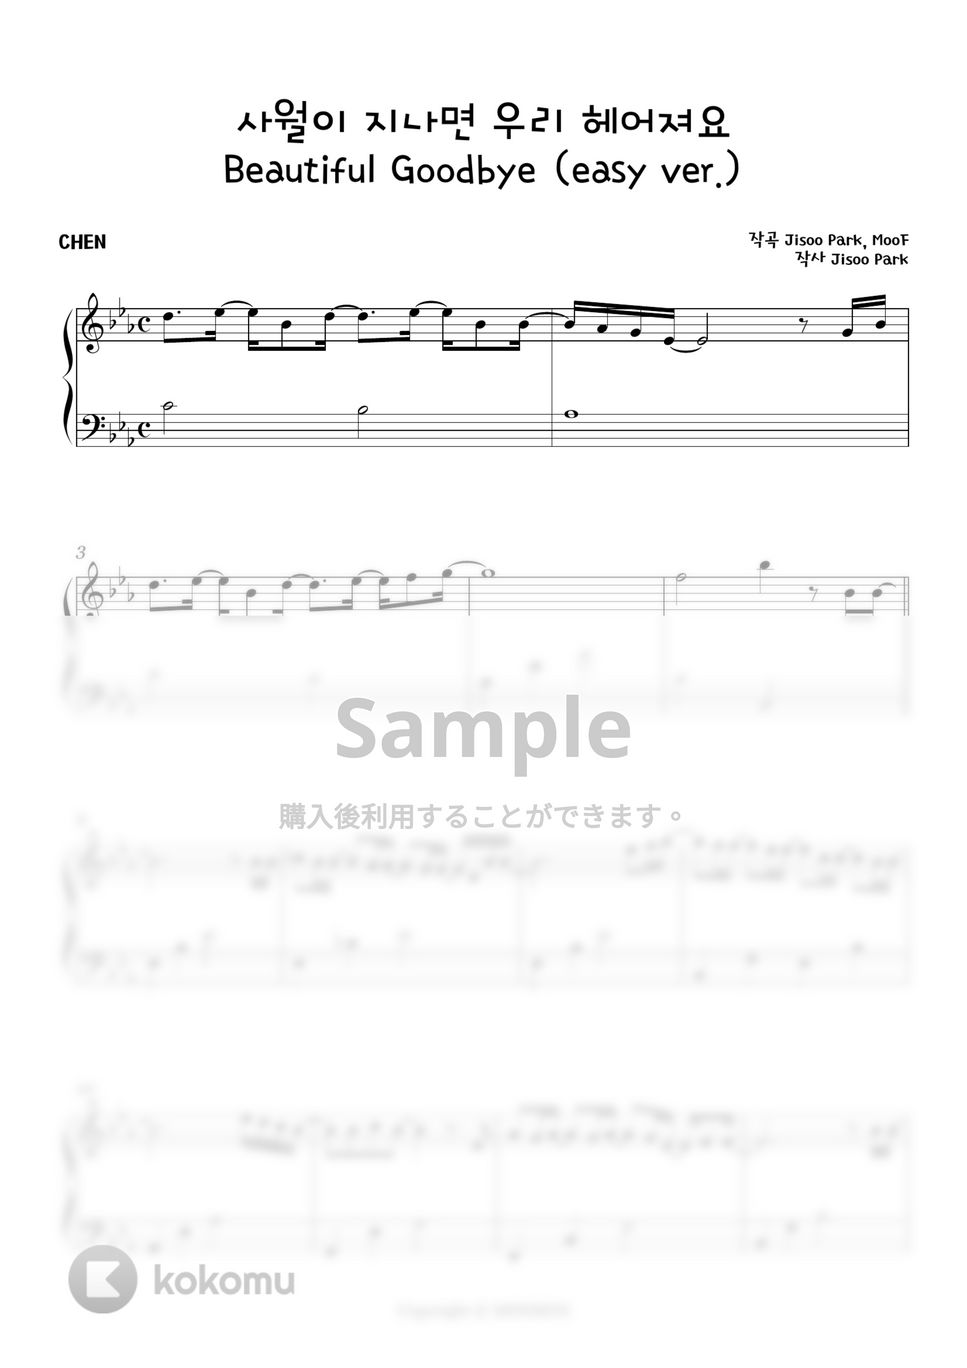 EXO CHEN - 4月が過ぎたら私たち別れましょう(Beautiful goodbye) (Easy ver.) by MINIBINI